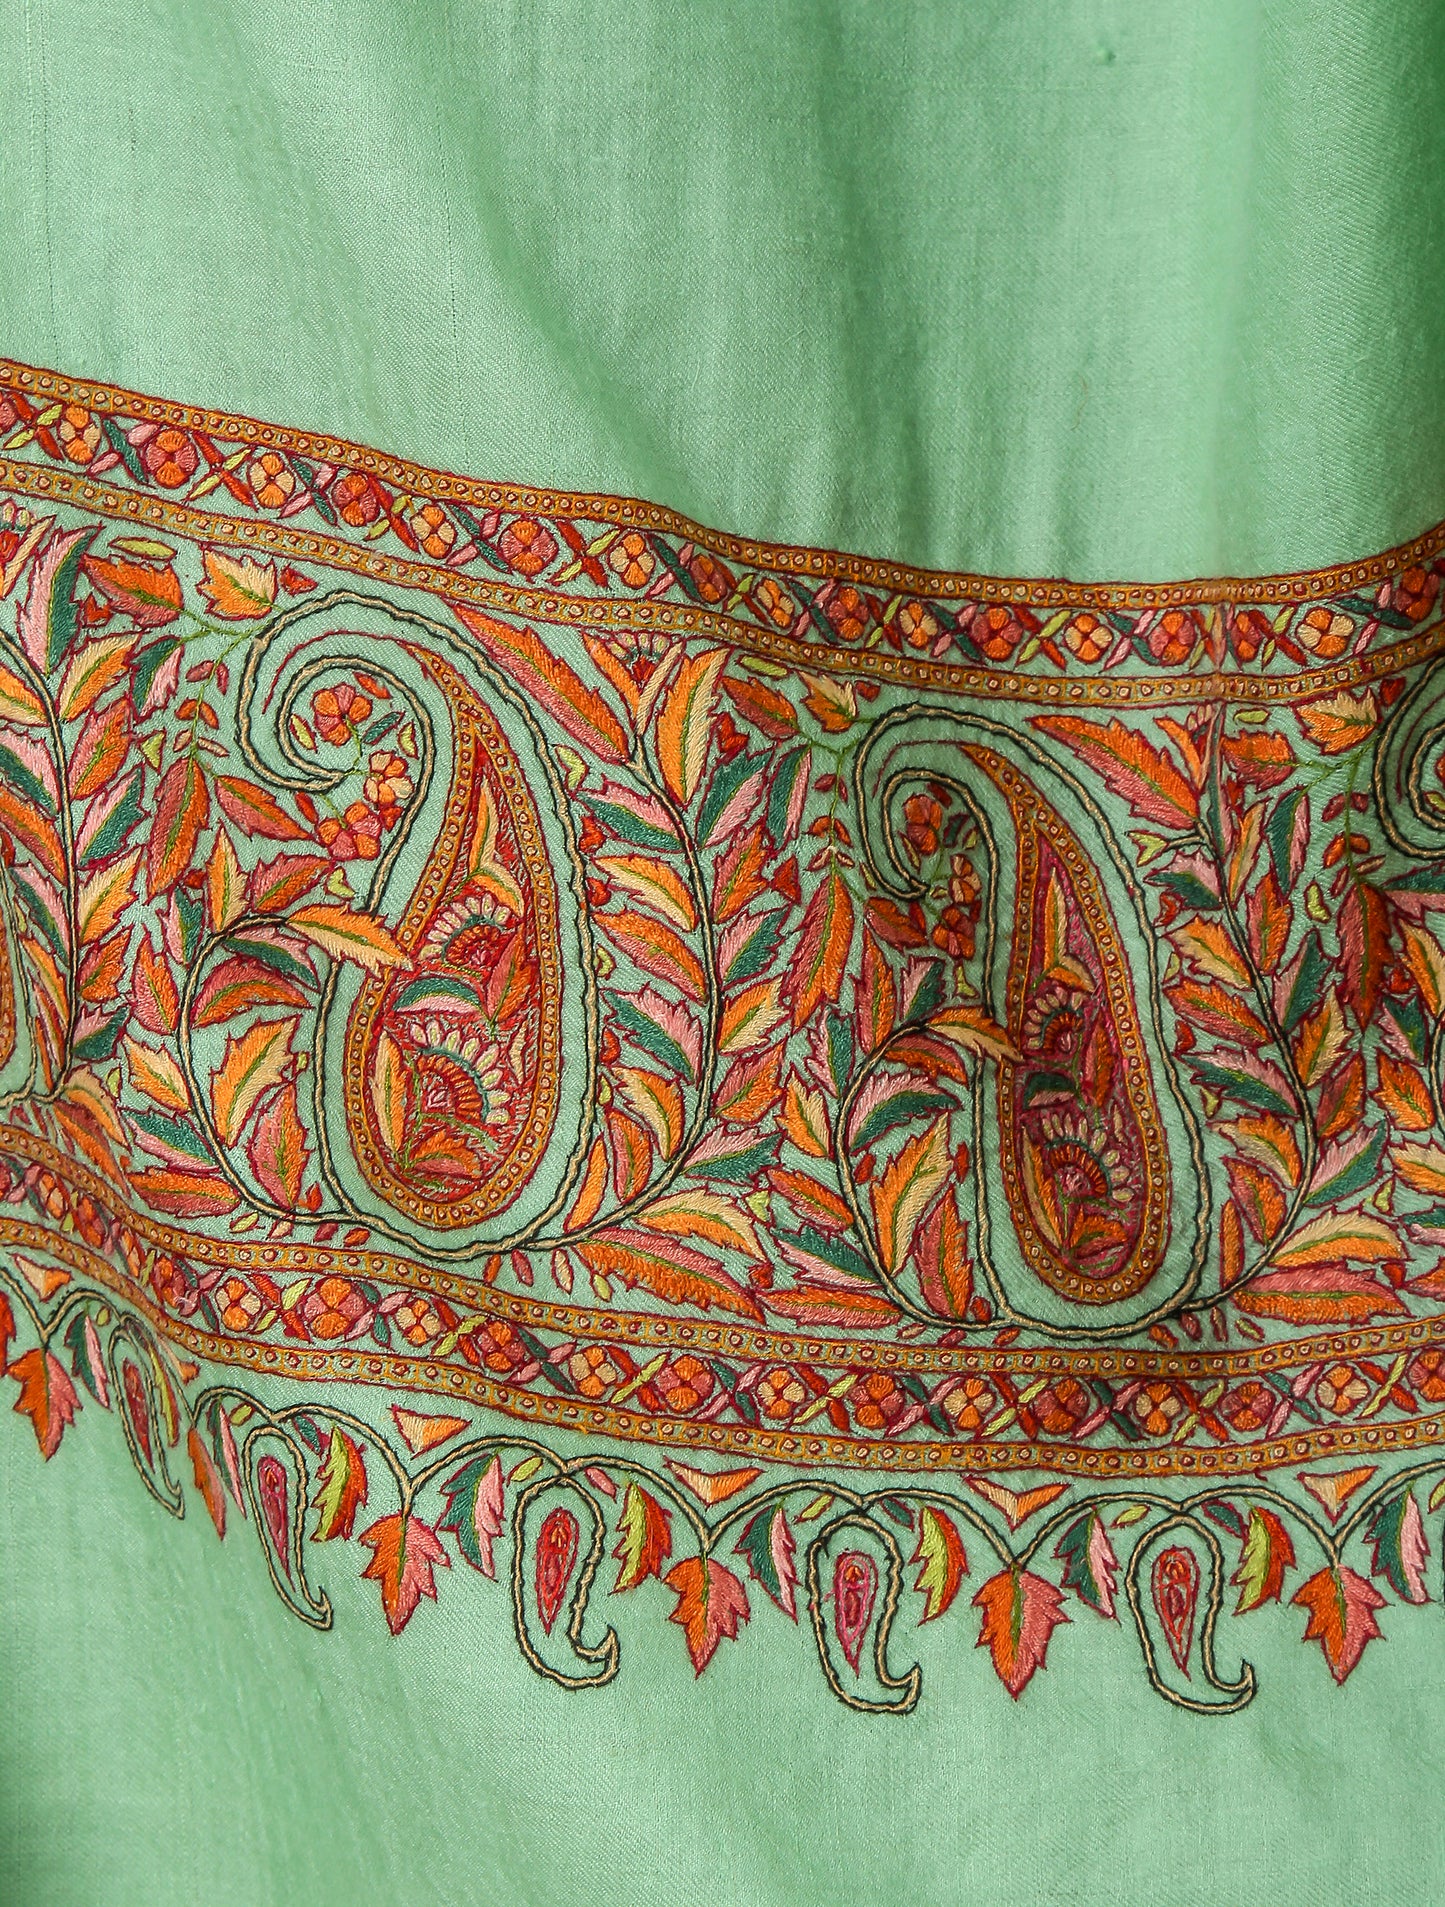 Cashmere Pashmina Shawl Embroidered (Sea Green)